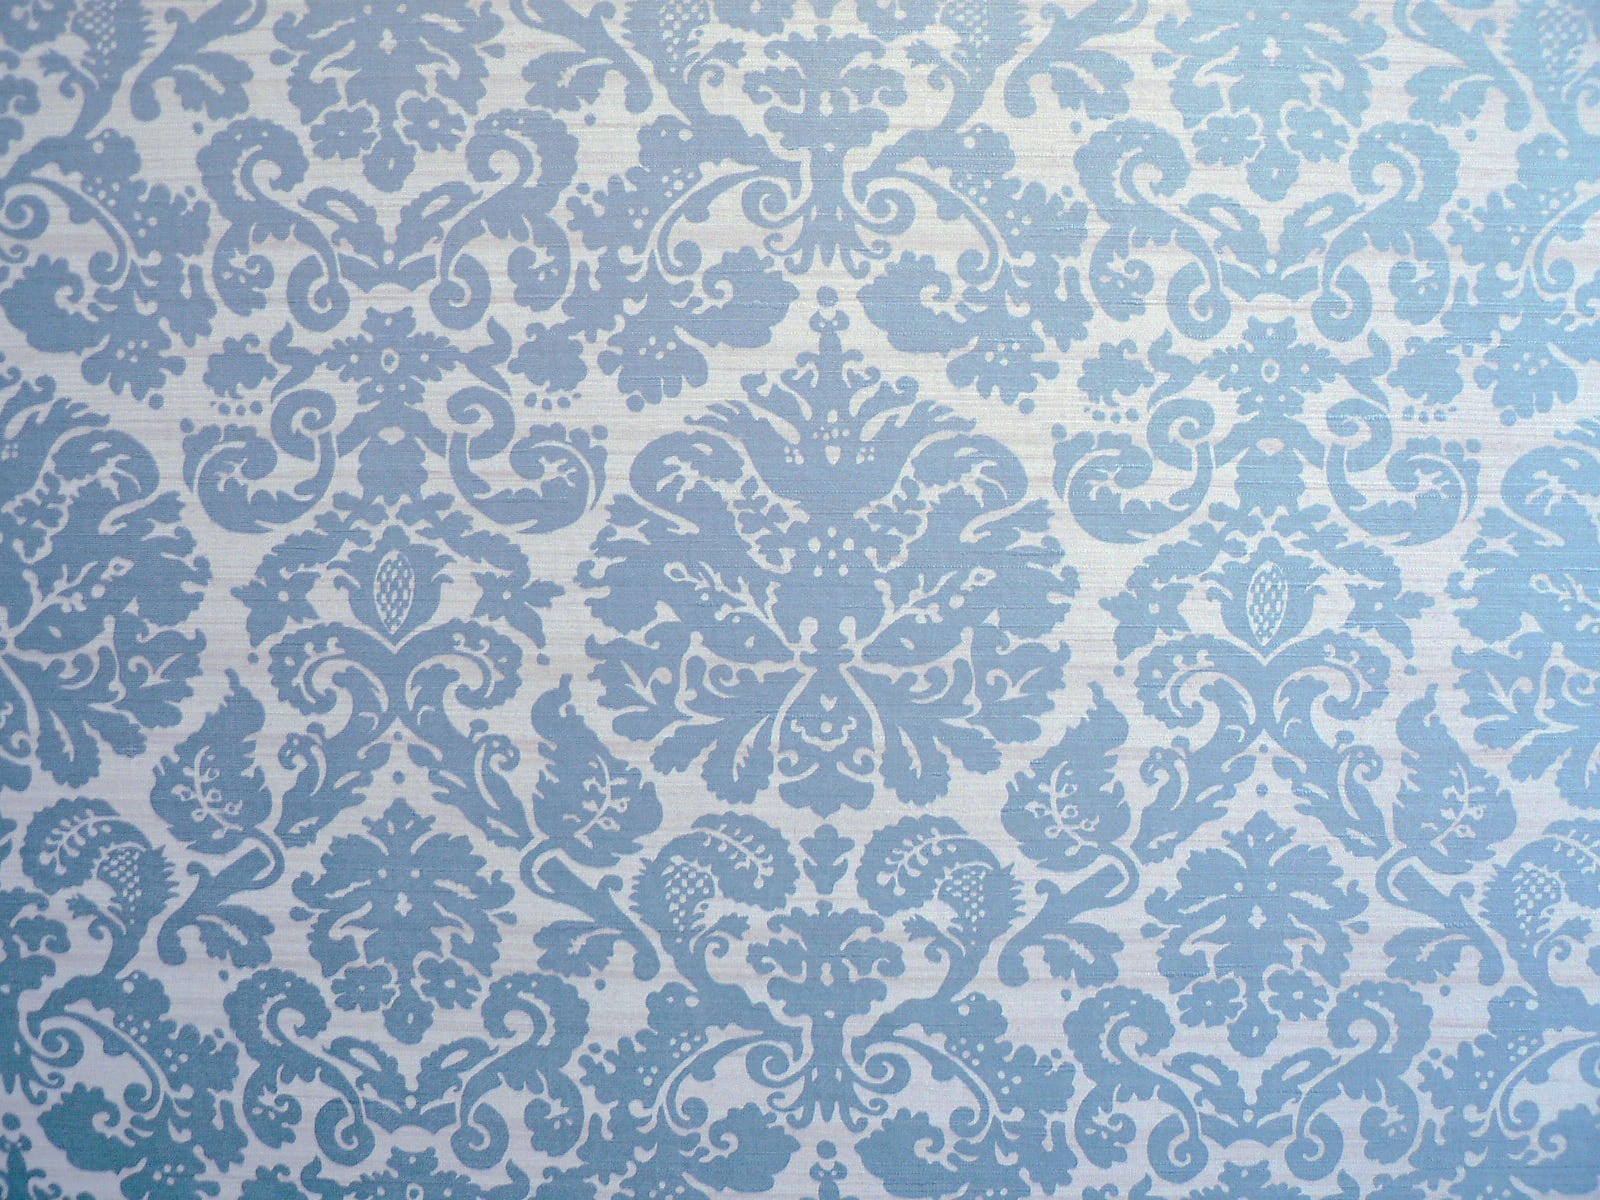 Graphic Design Research Blog Victorian Edwardian HD Wallpapers Download Free Images Wallpaper [wallpaper981.blogspot.com]